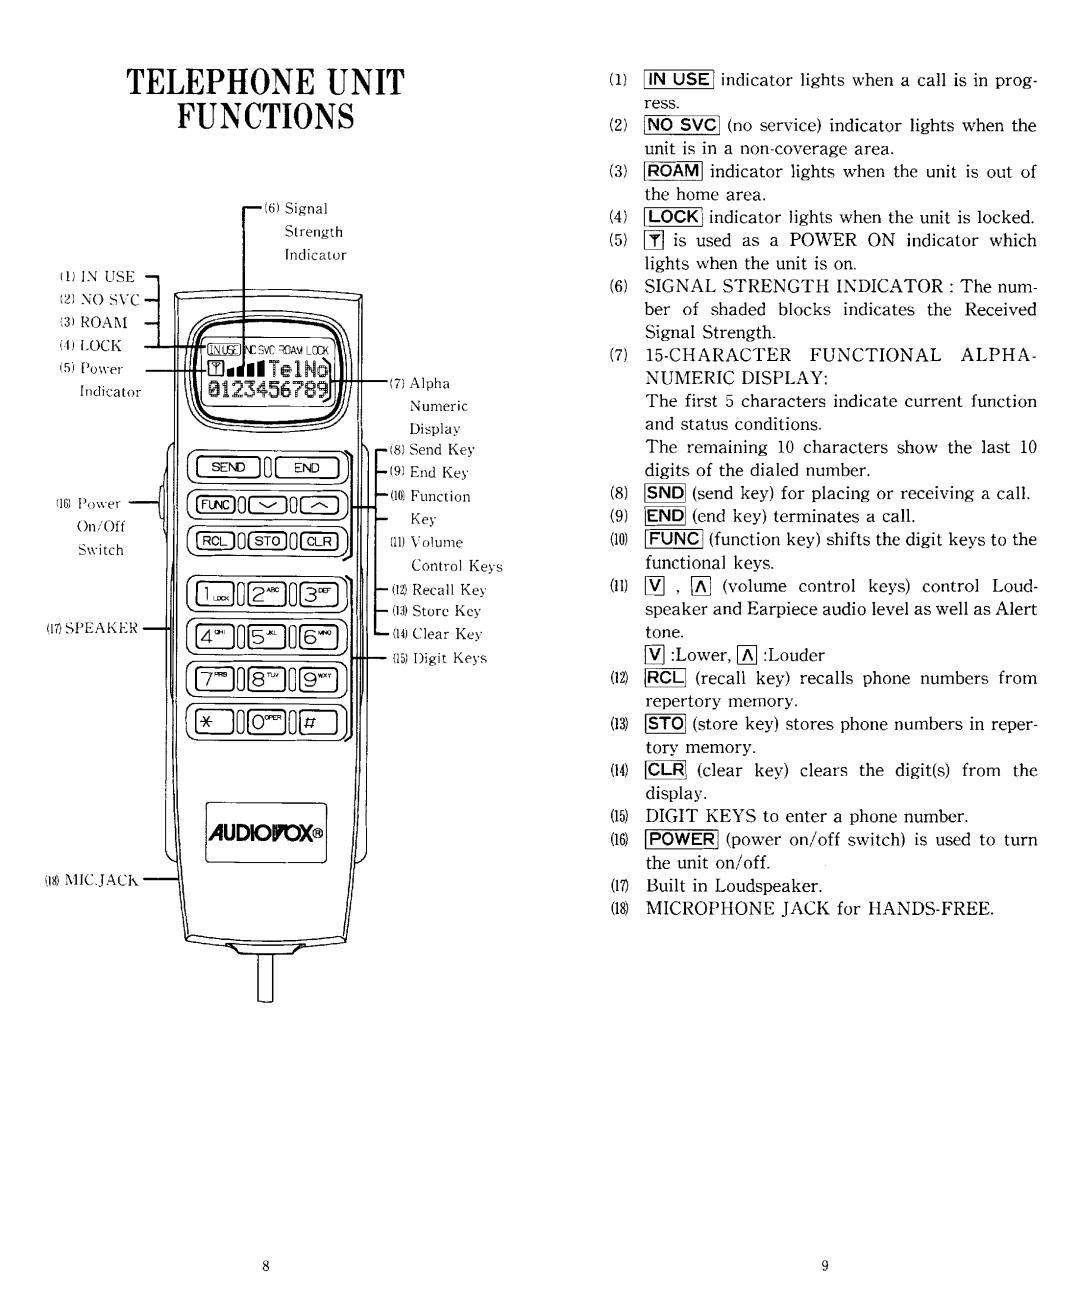 Audiovox TRAN-410A manual 